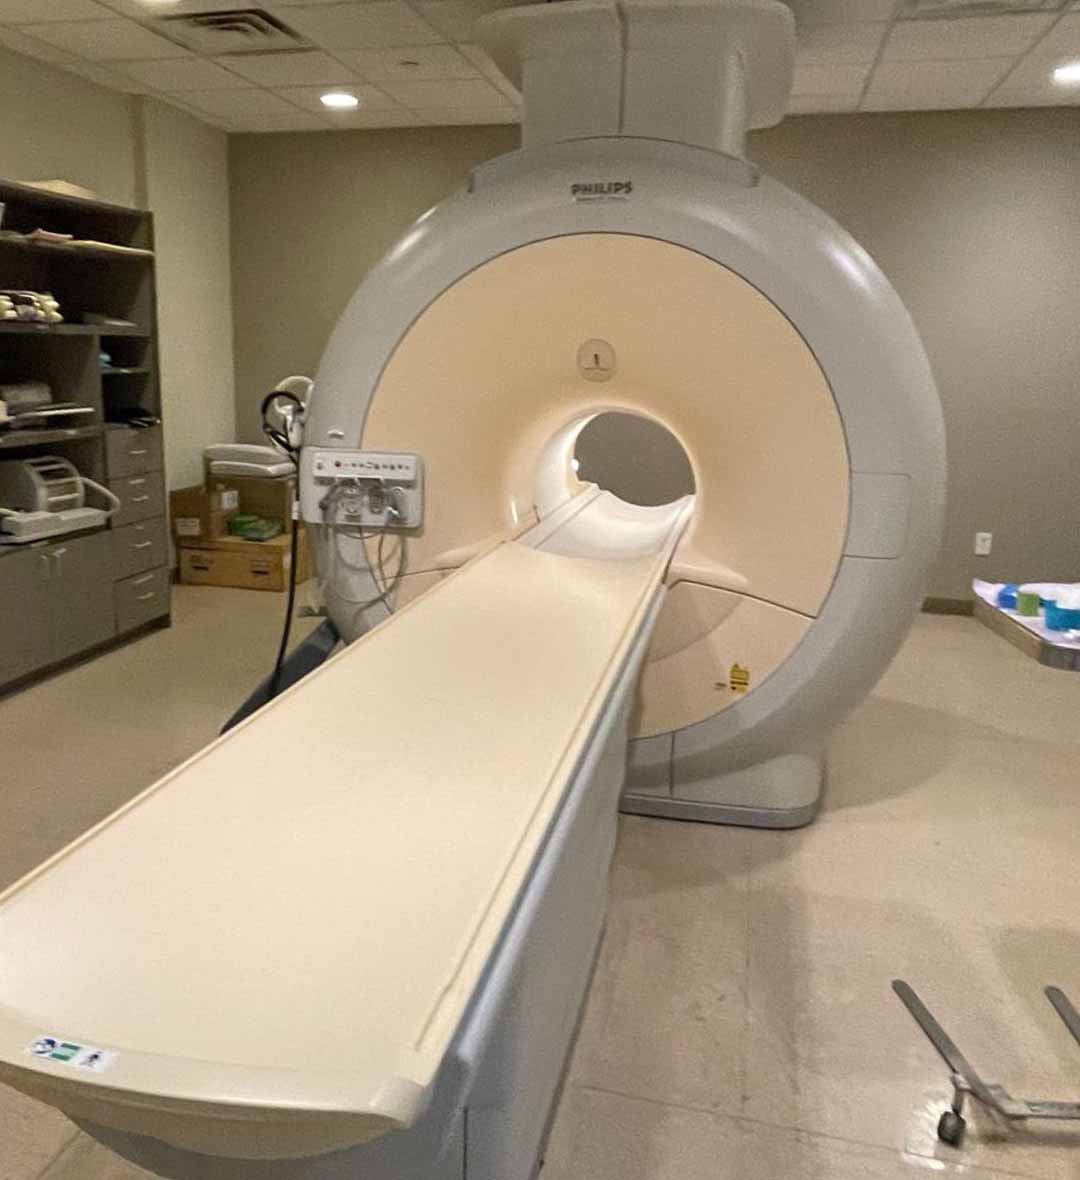 2008 Philips Achieva XR-Series 3.0T MRI System